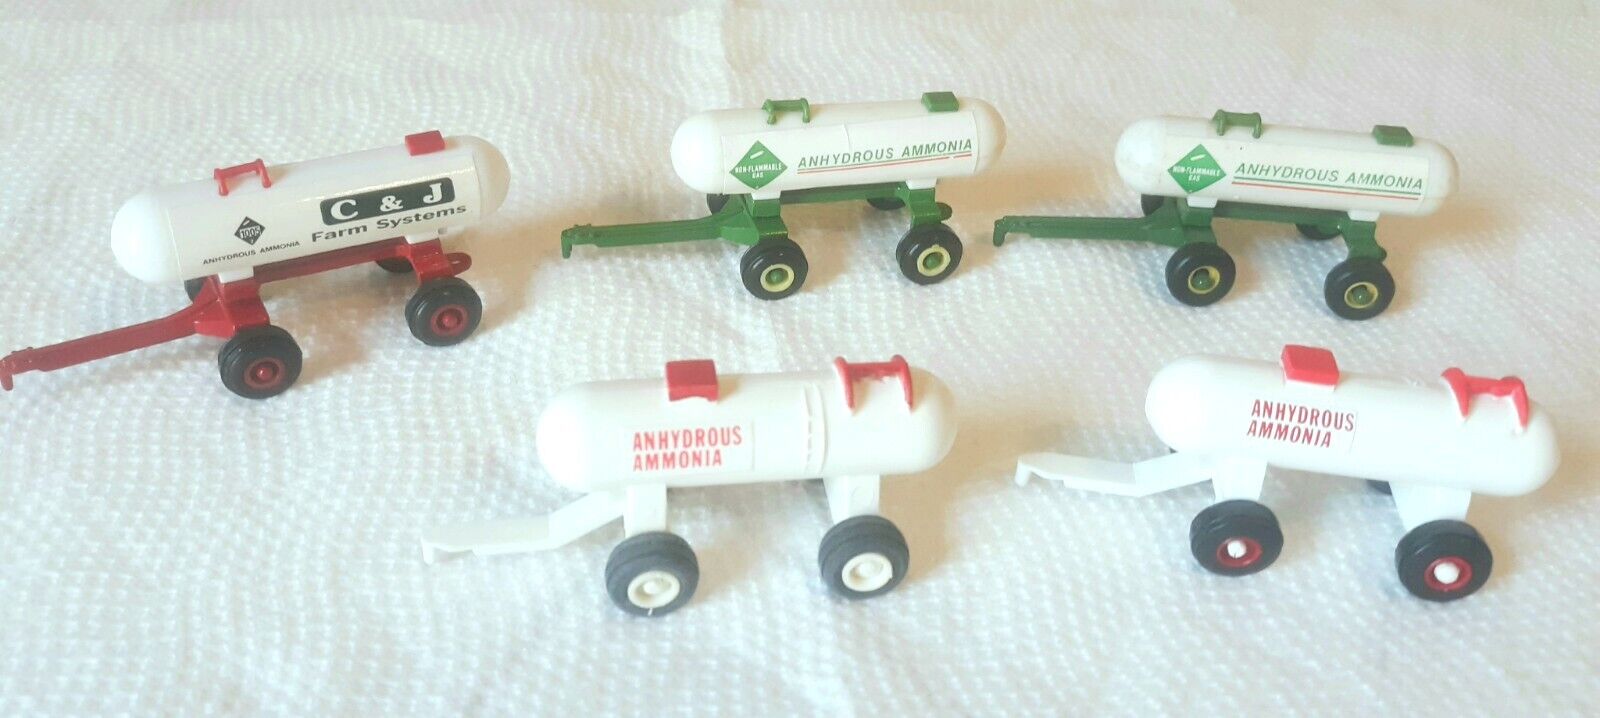  1/64 Ertl Toy Farmer Anhydrous Ammonia Tank Farm Toy Lot Of 5 John Deere